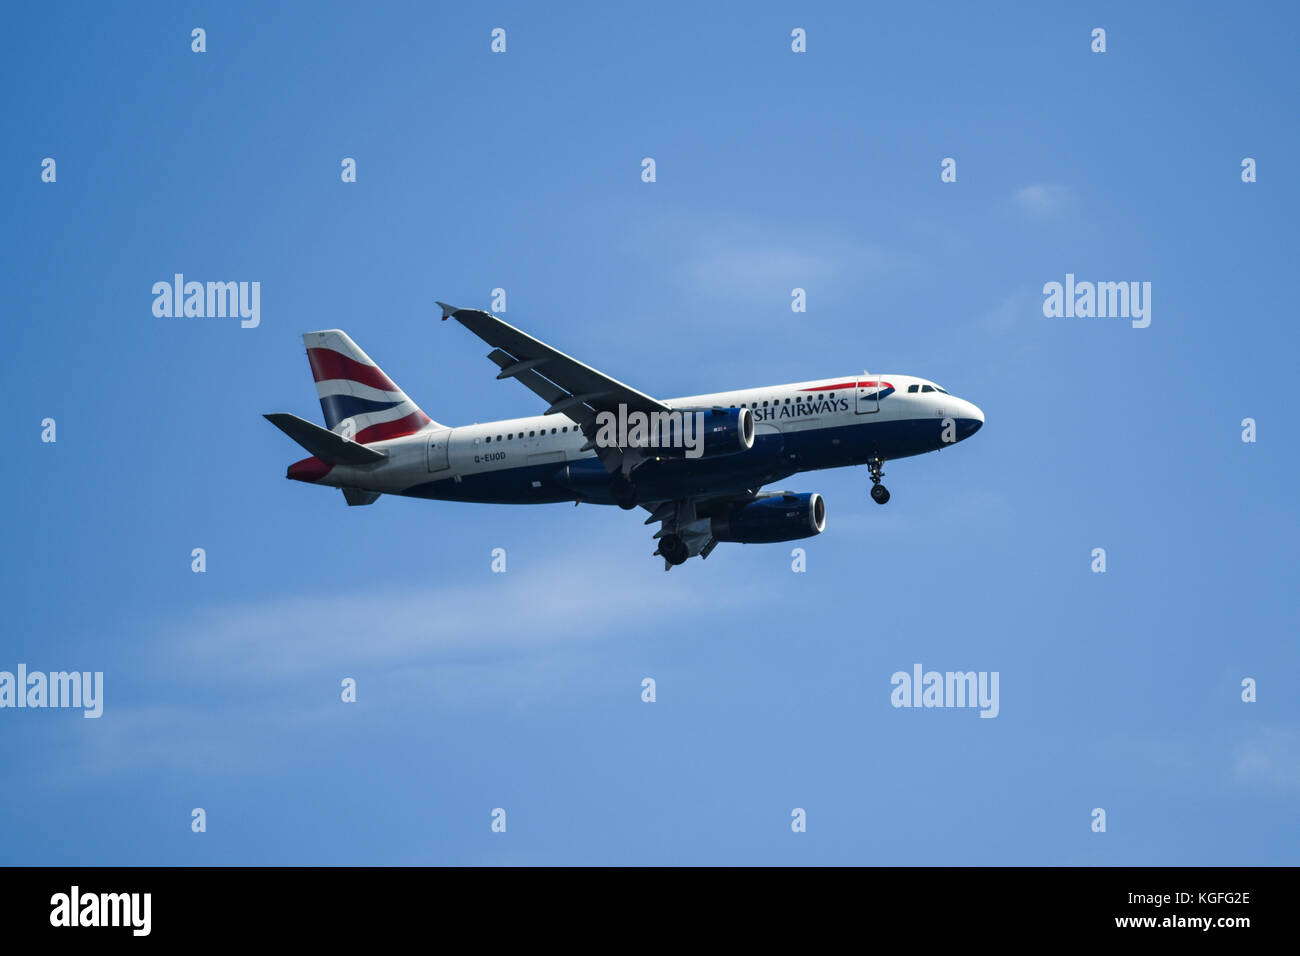 Bergen, Norway, 24 July 2017: British airways plane flying against the blue sky in Norway. Stock Photo